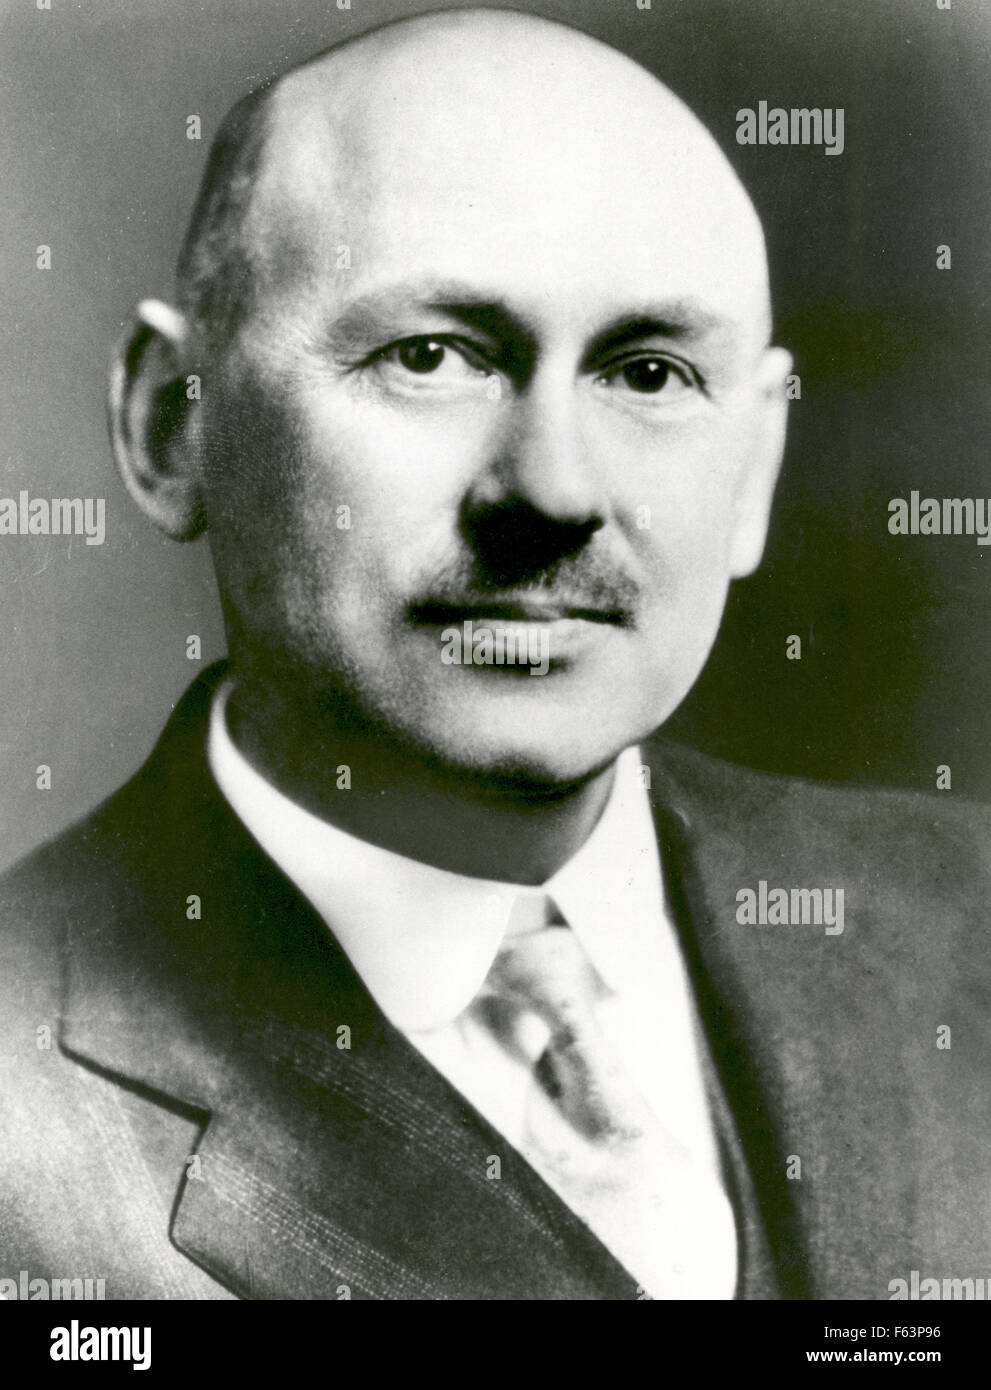 ROBERT GODDARD (1882-1945) American physicist who built the first liquid-fueled rocket. Photo : NASA Stock Photo